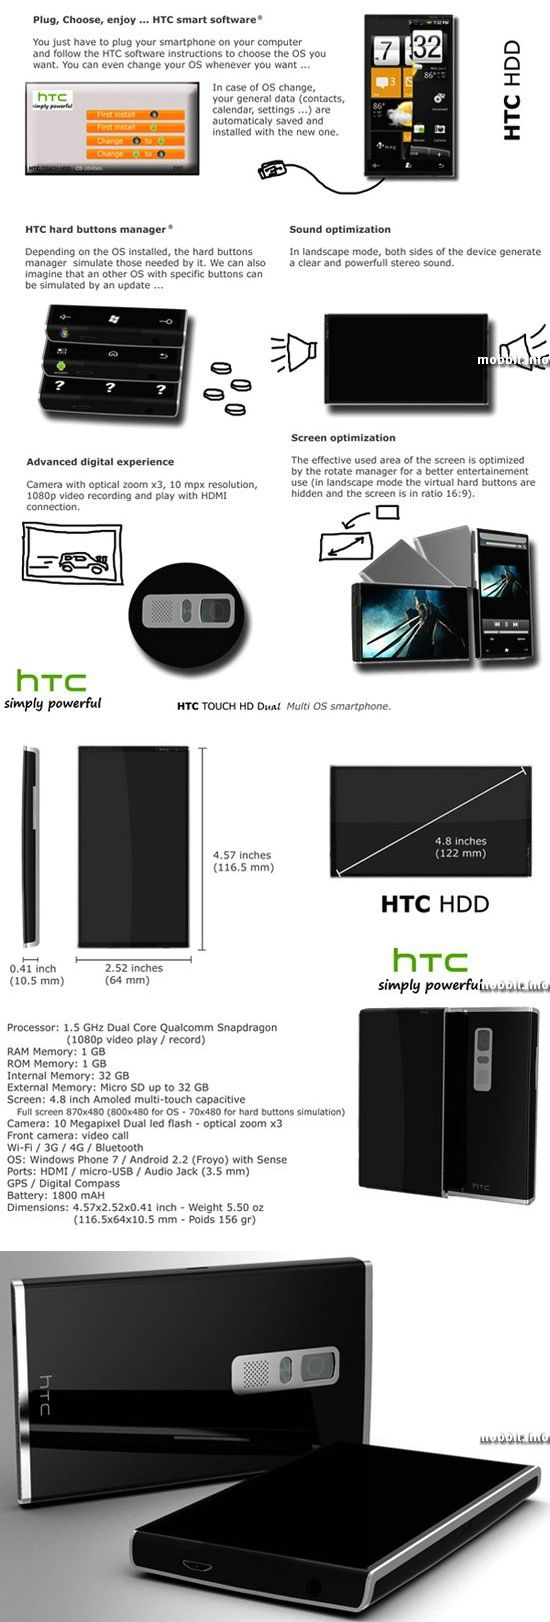 HTC HDD